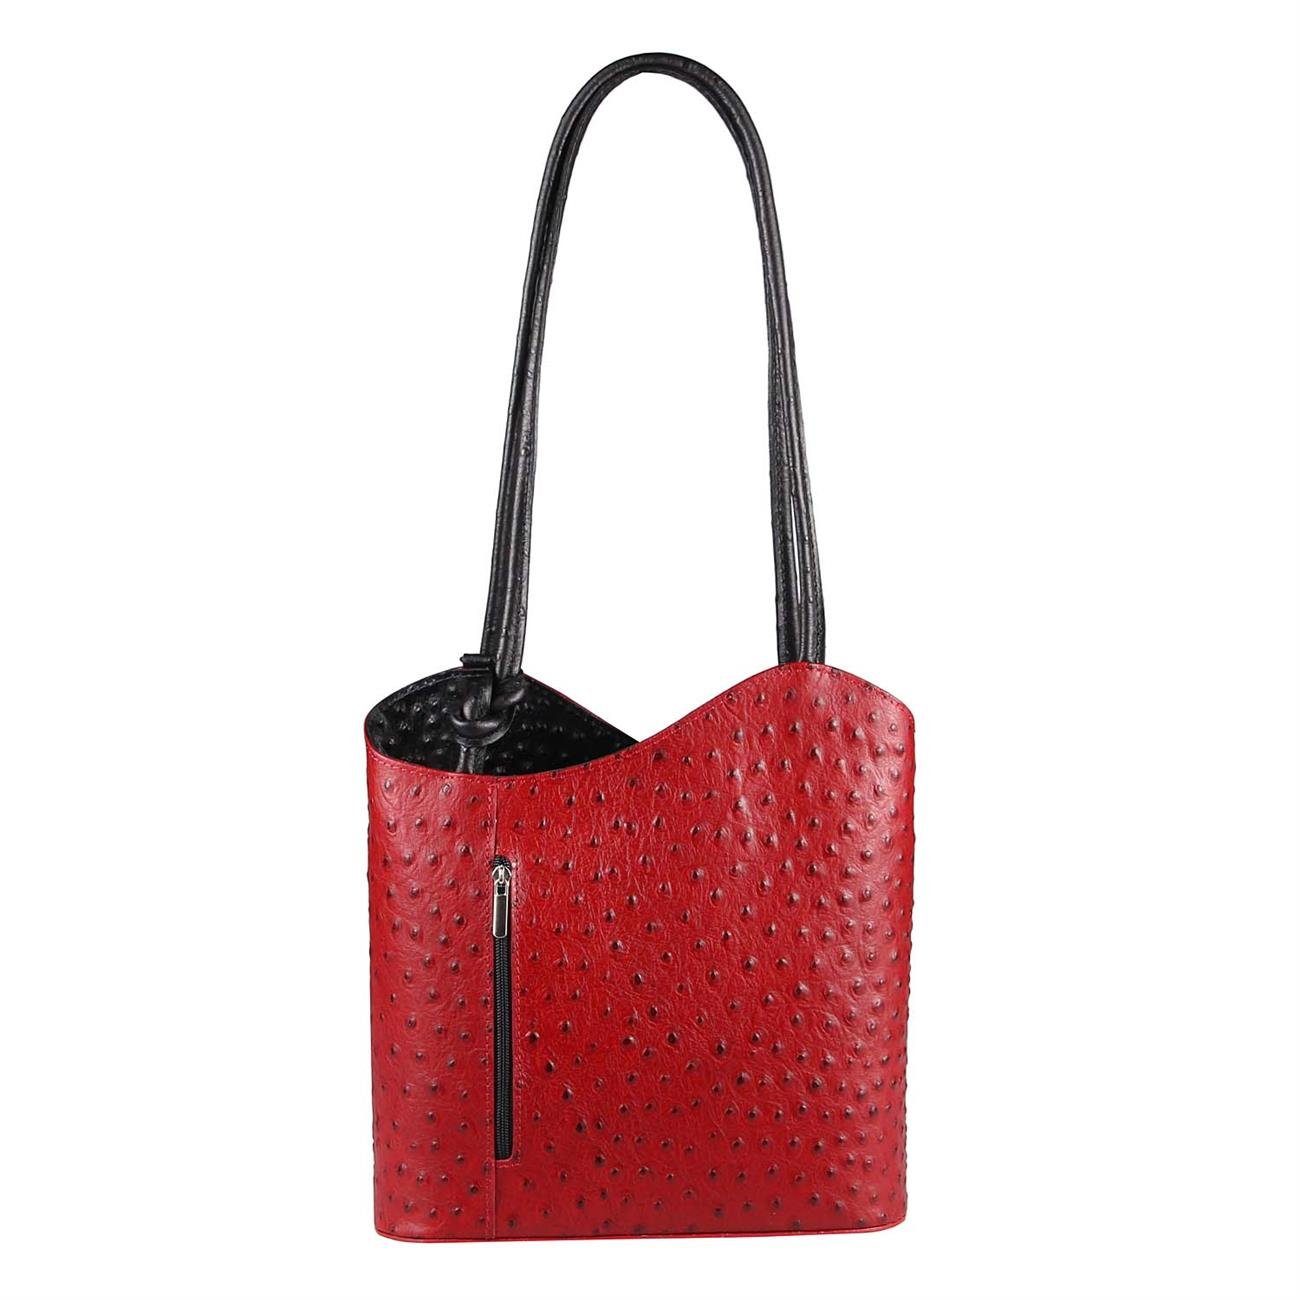 Made Damen Rucksack Schultertasche, Italy Rucksack Tasche Leder ITALYSHOP24 & in Handtasche/Schultertasche als tragbar